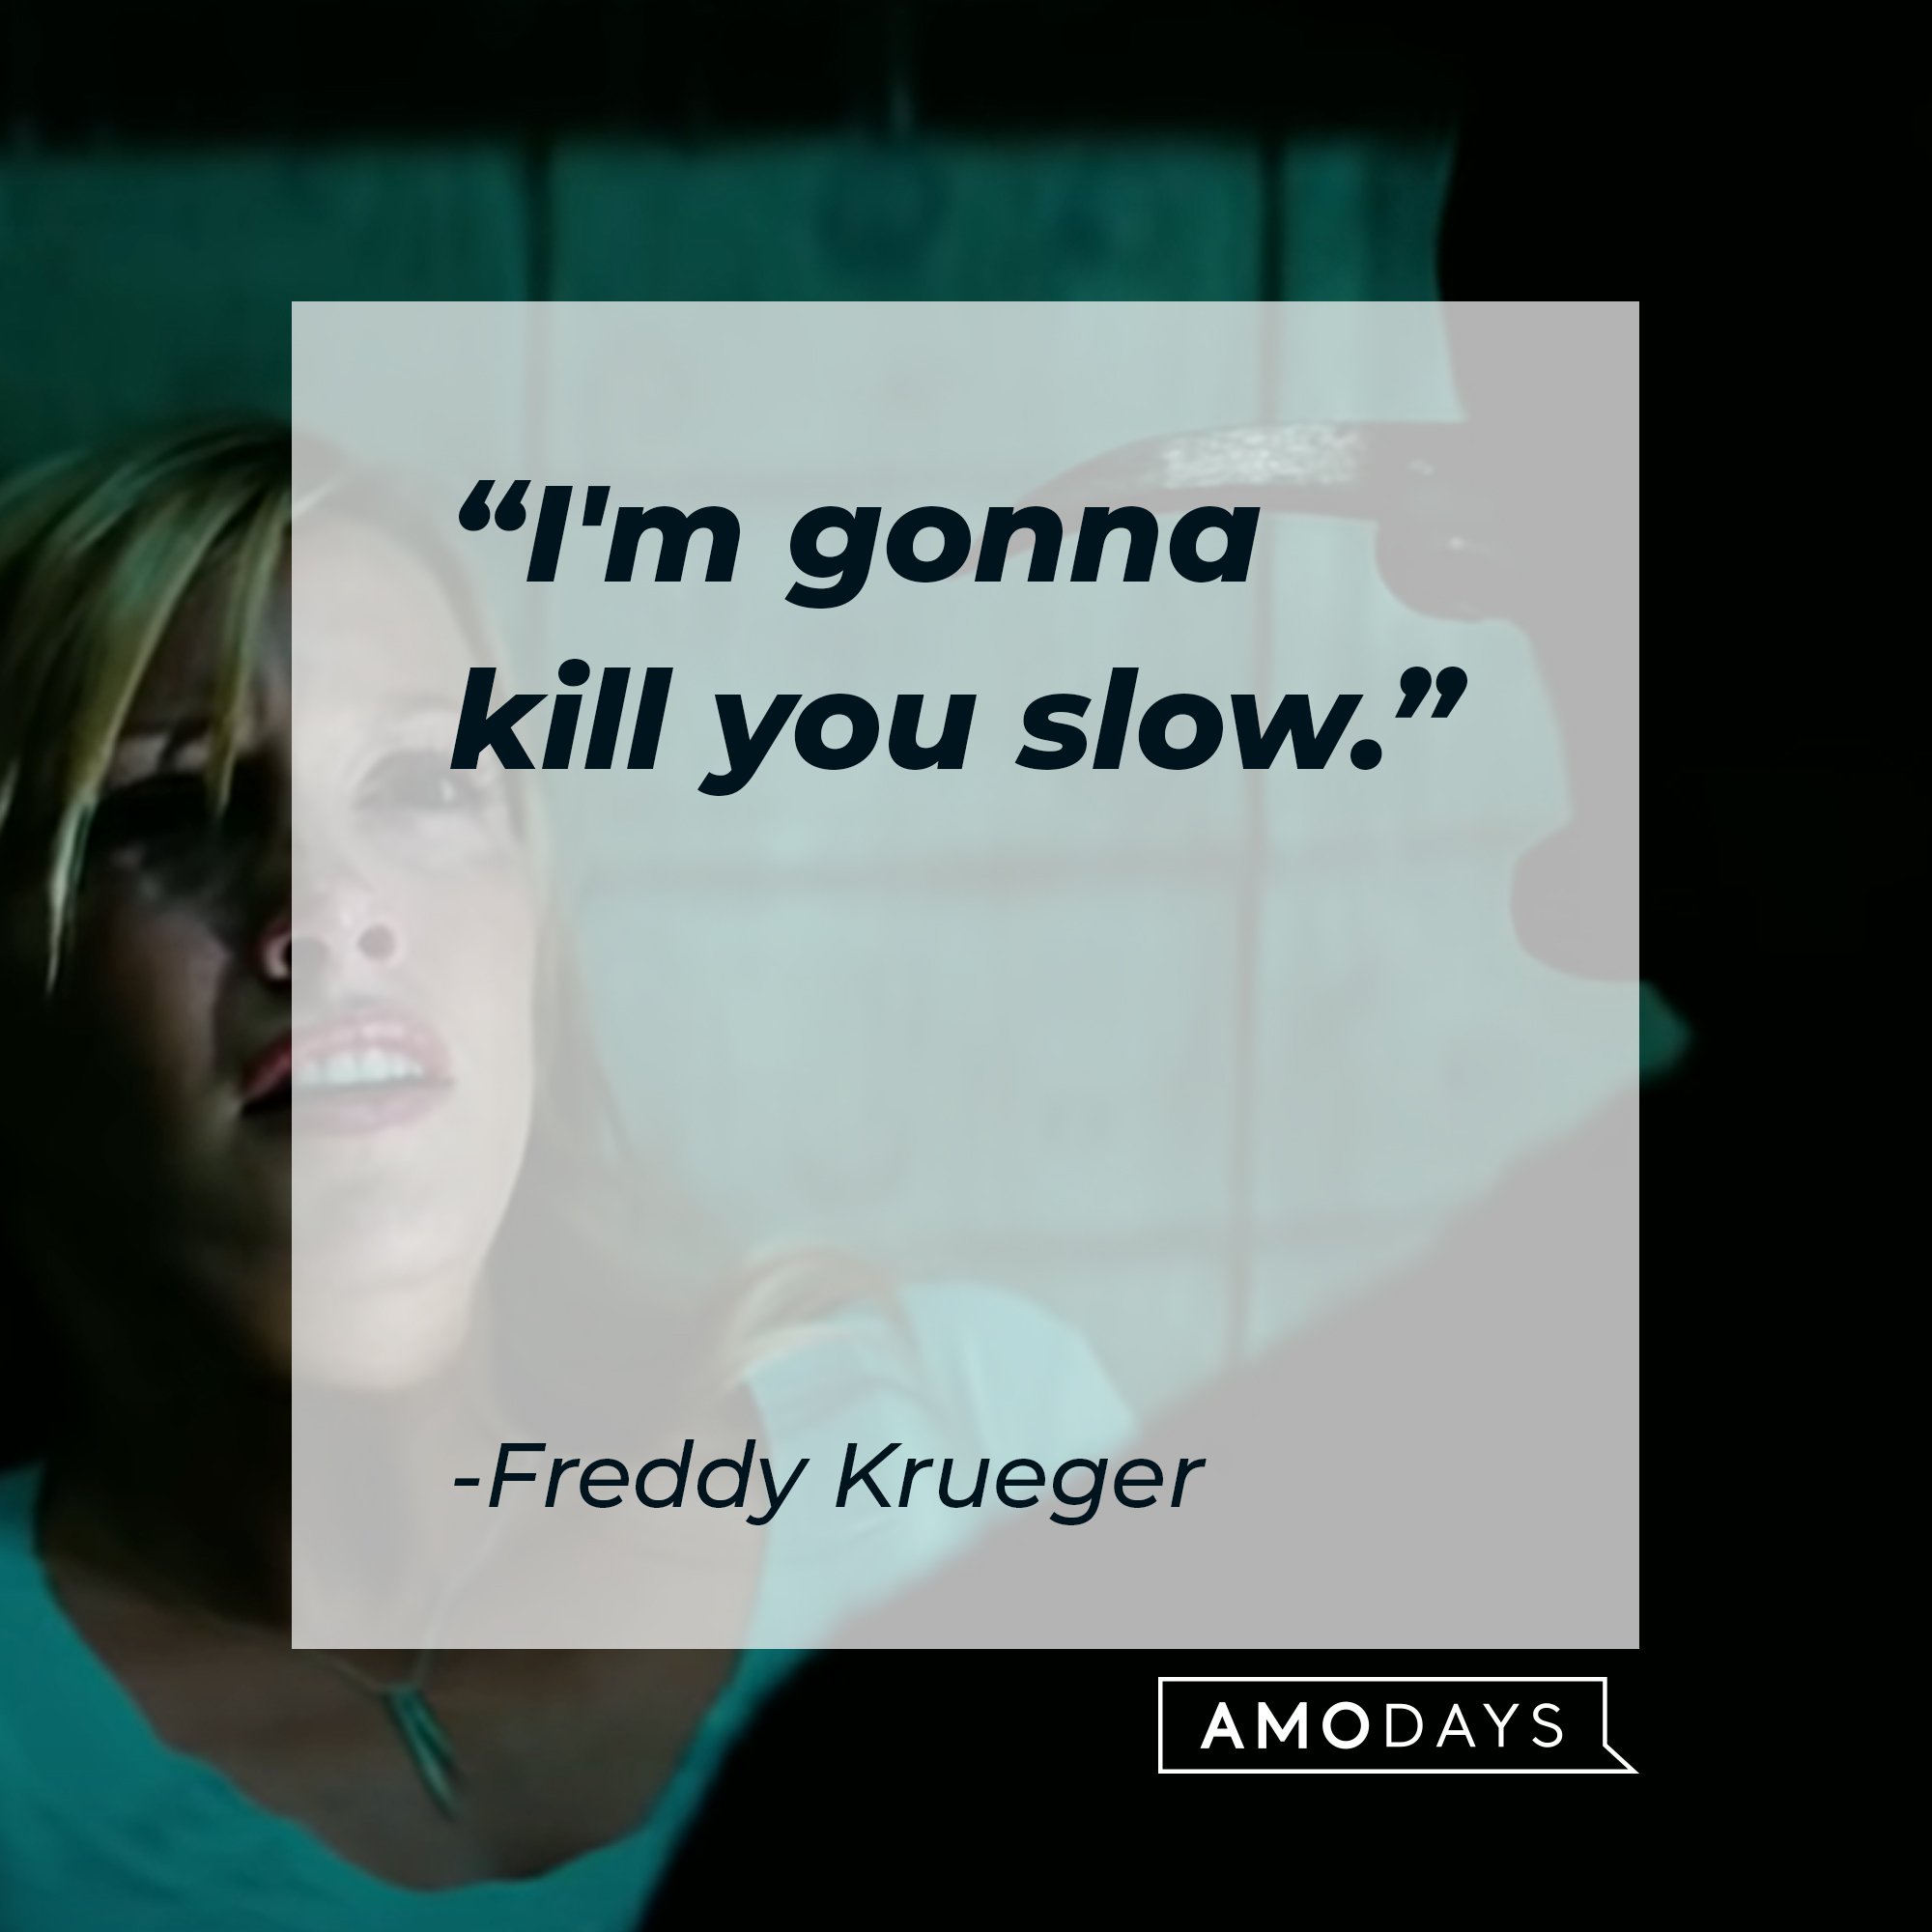 Freddy Krueger’s quote: “I'm gonna kill you slow." | Image: AmoDays